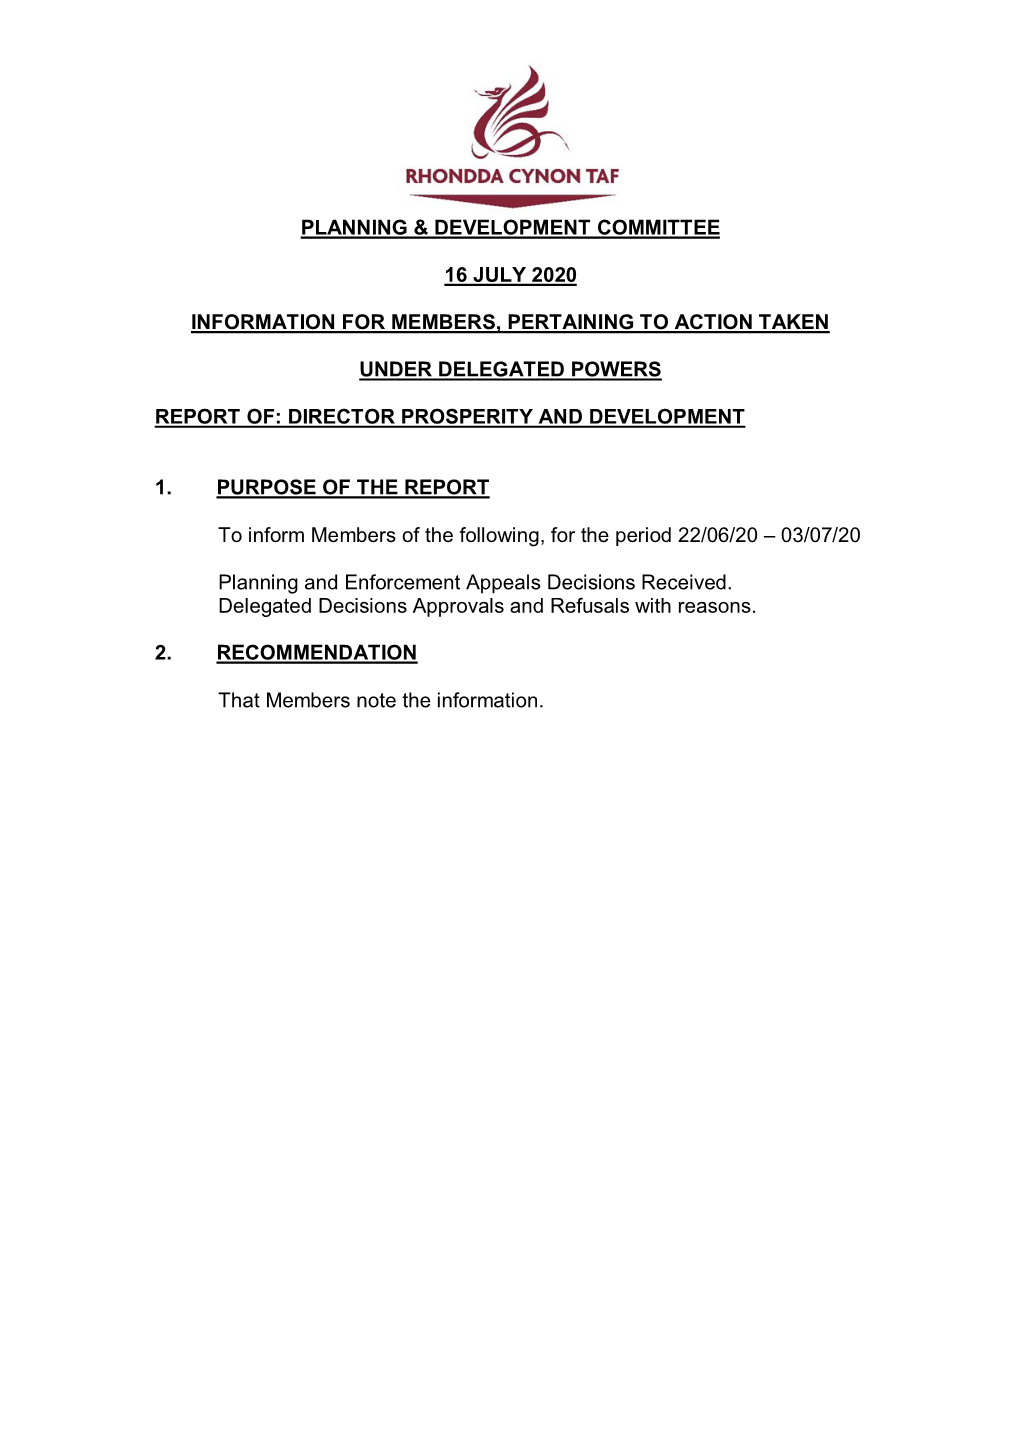 Planning & Development Committee 16 July 2020